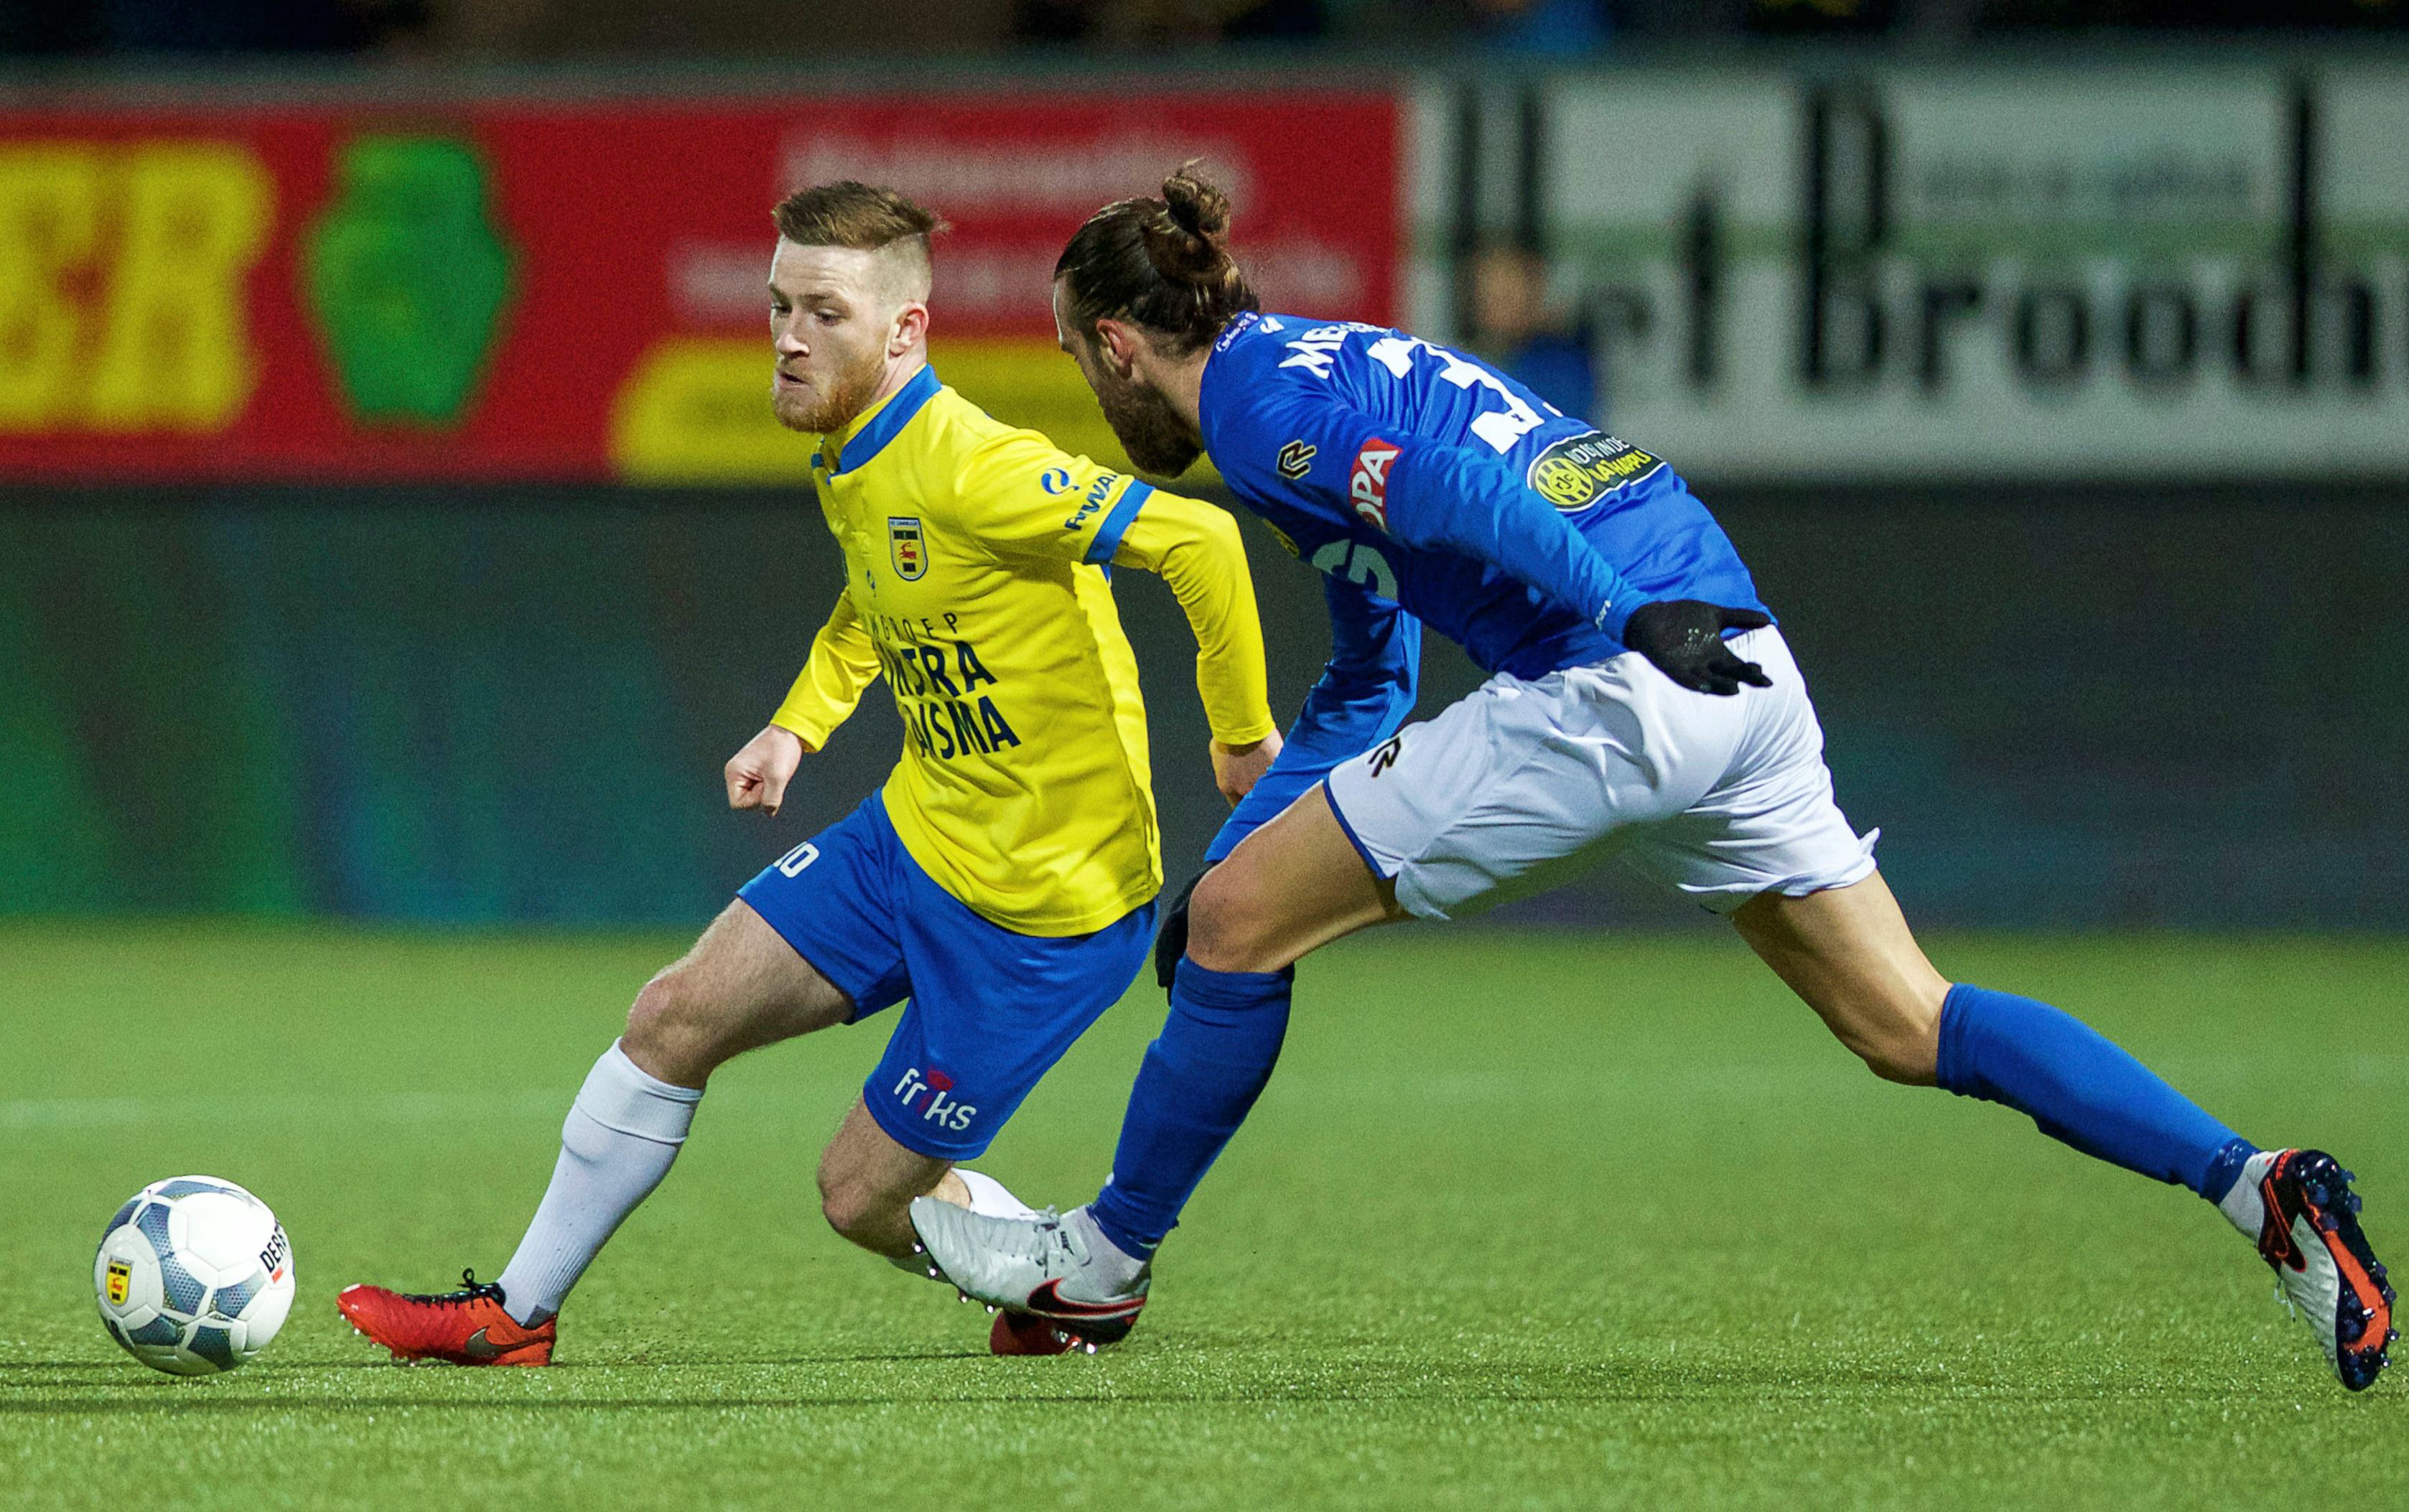 SC Cambuur-middenvelder Jack Byrne scoorde drie keer in de Eredivisie en is succesvol in zijn eindpassing.